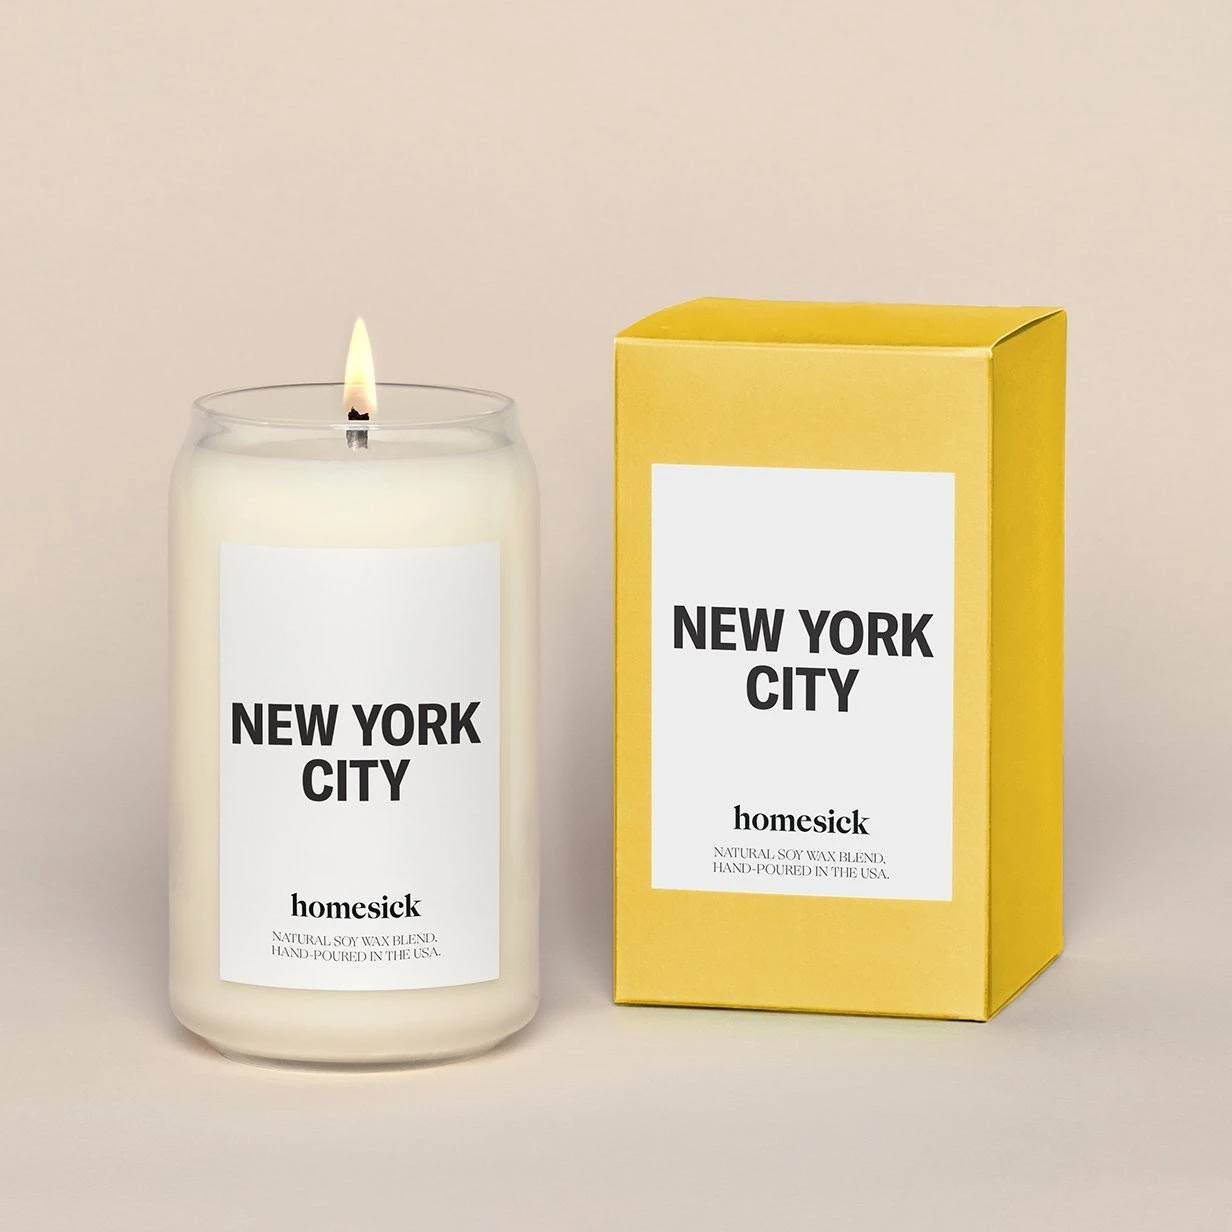 homesick 的 New York City 大豆蜡烛